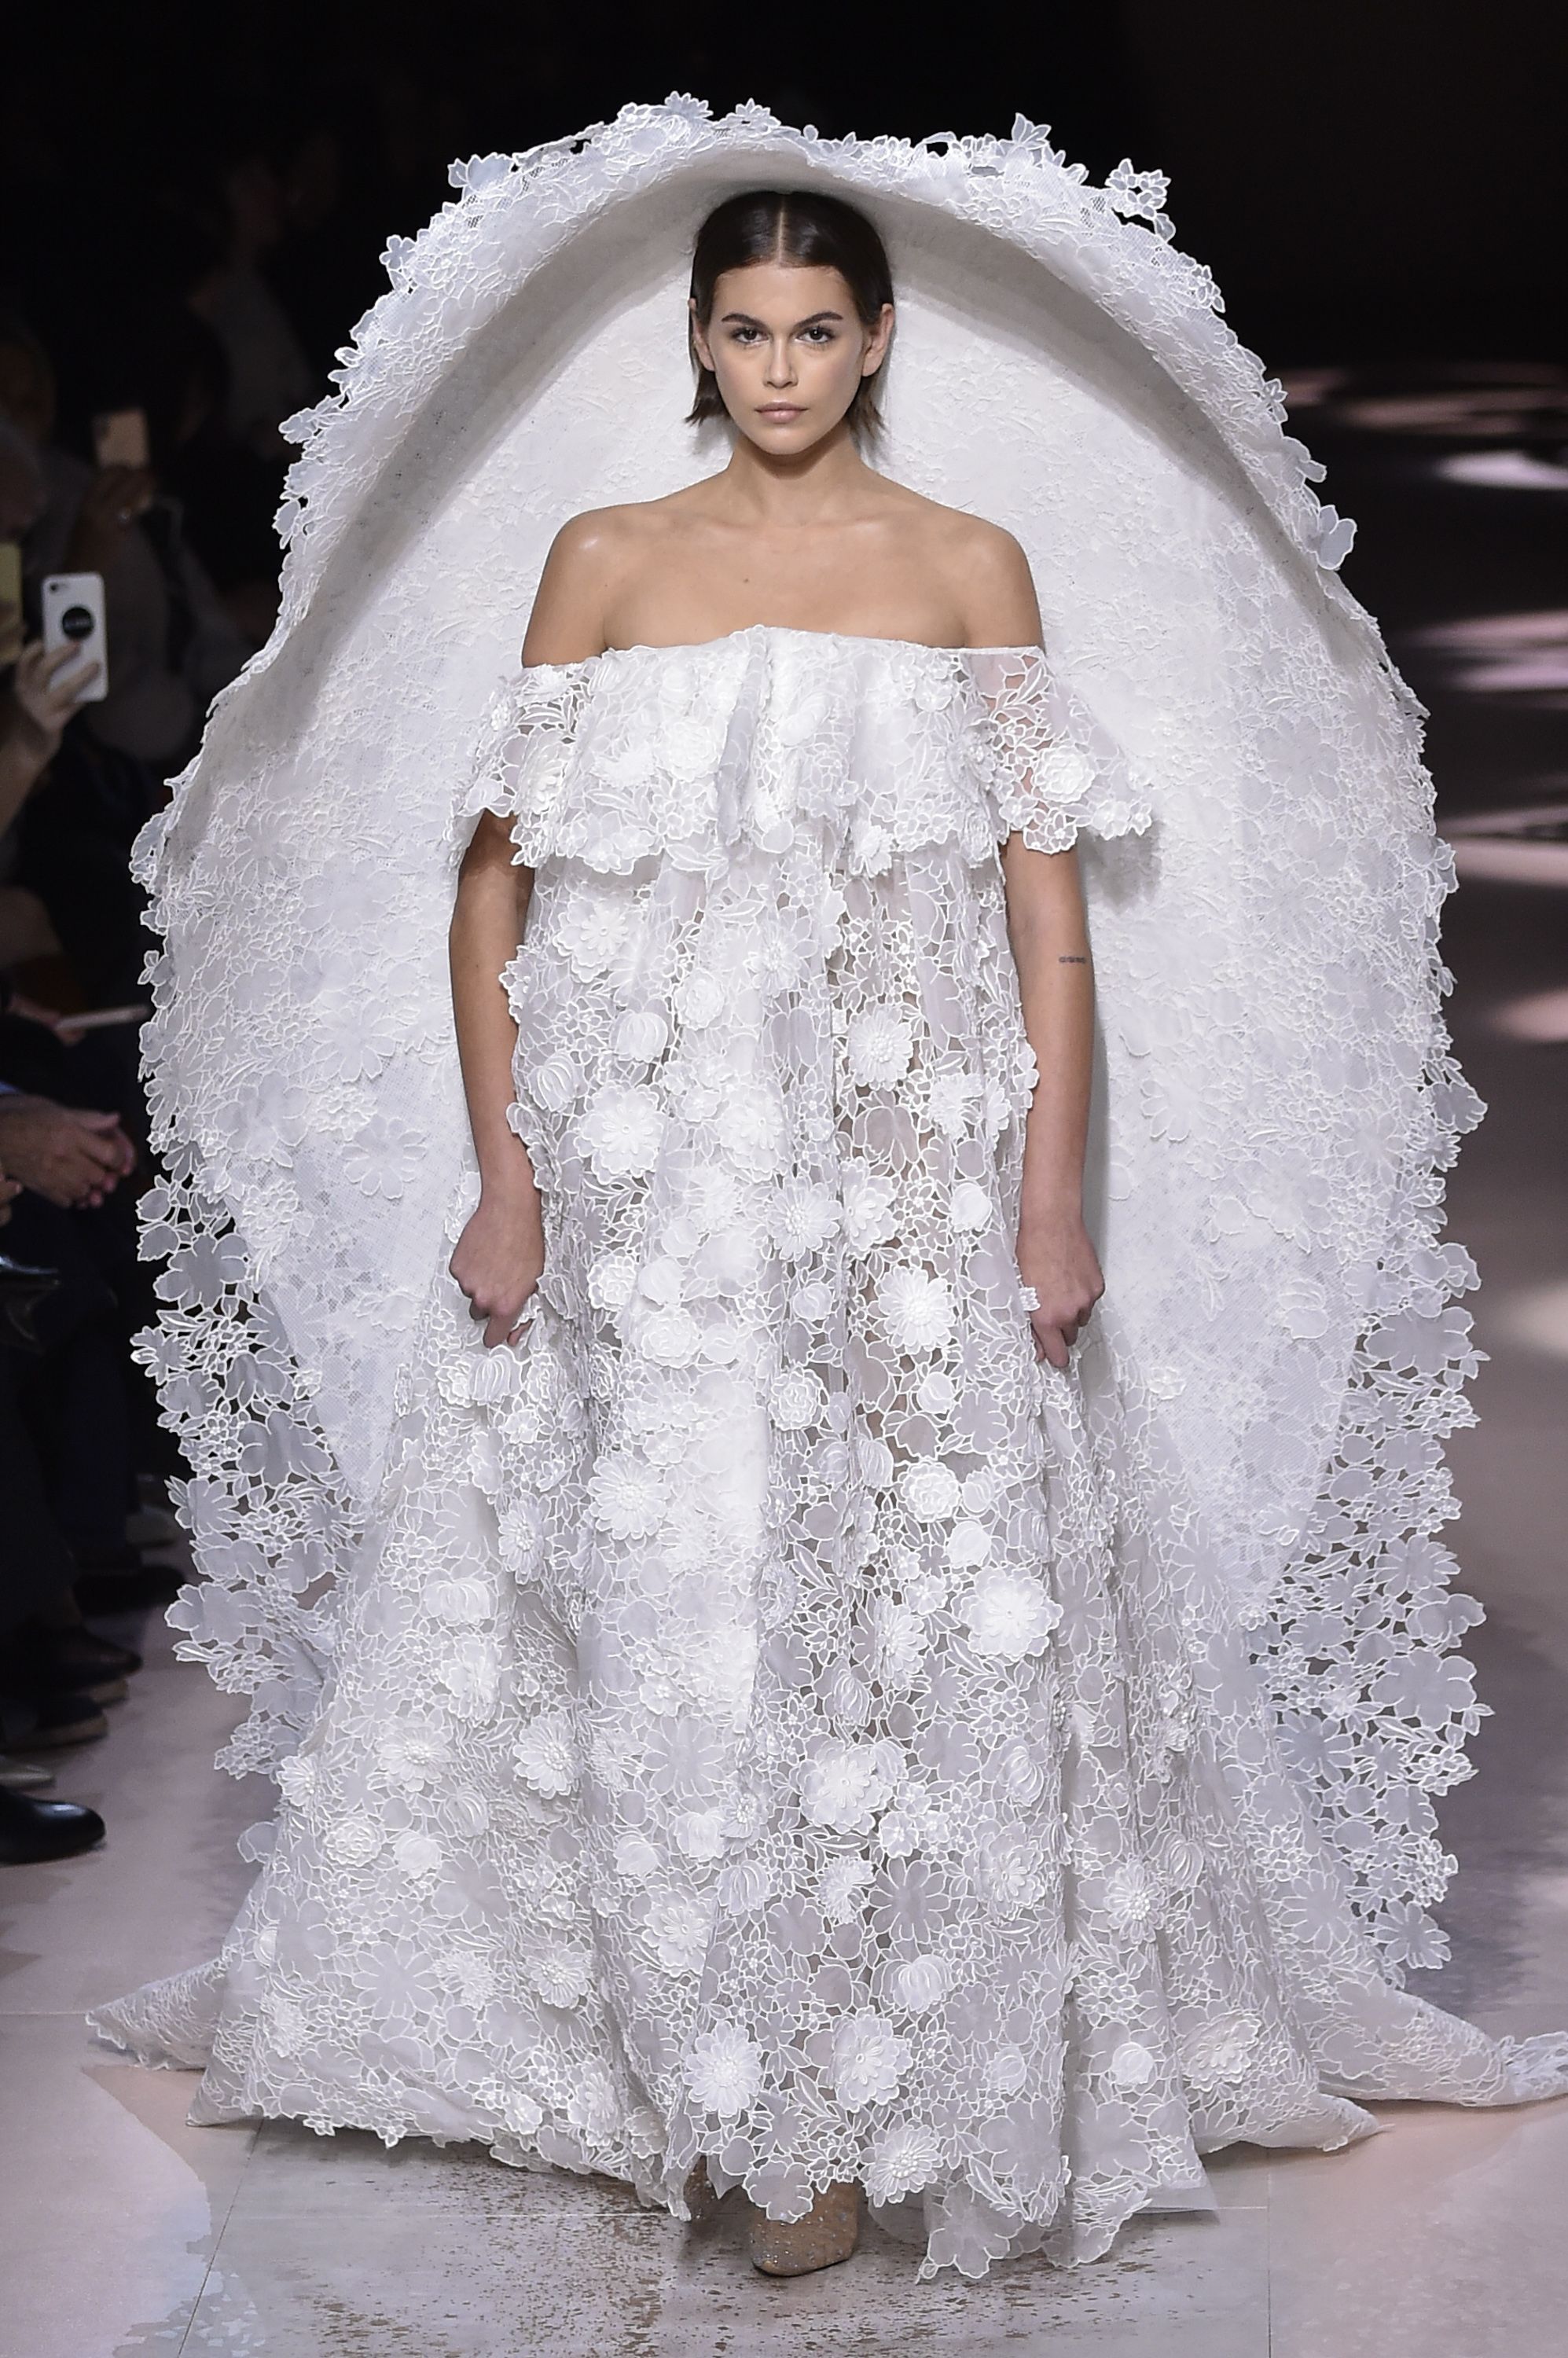 Chanel Dior Givenchy Bridal Fashion – The Greatest Runway Bridal ...